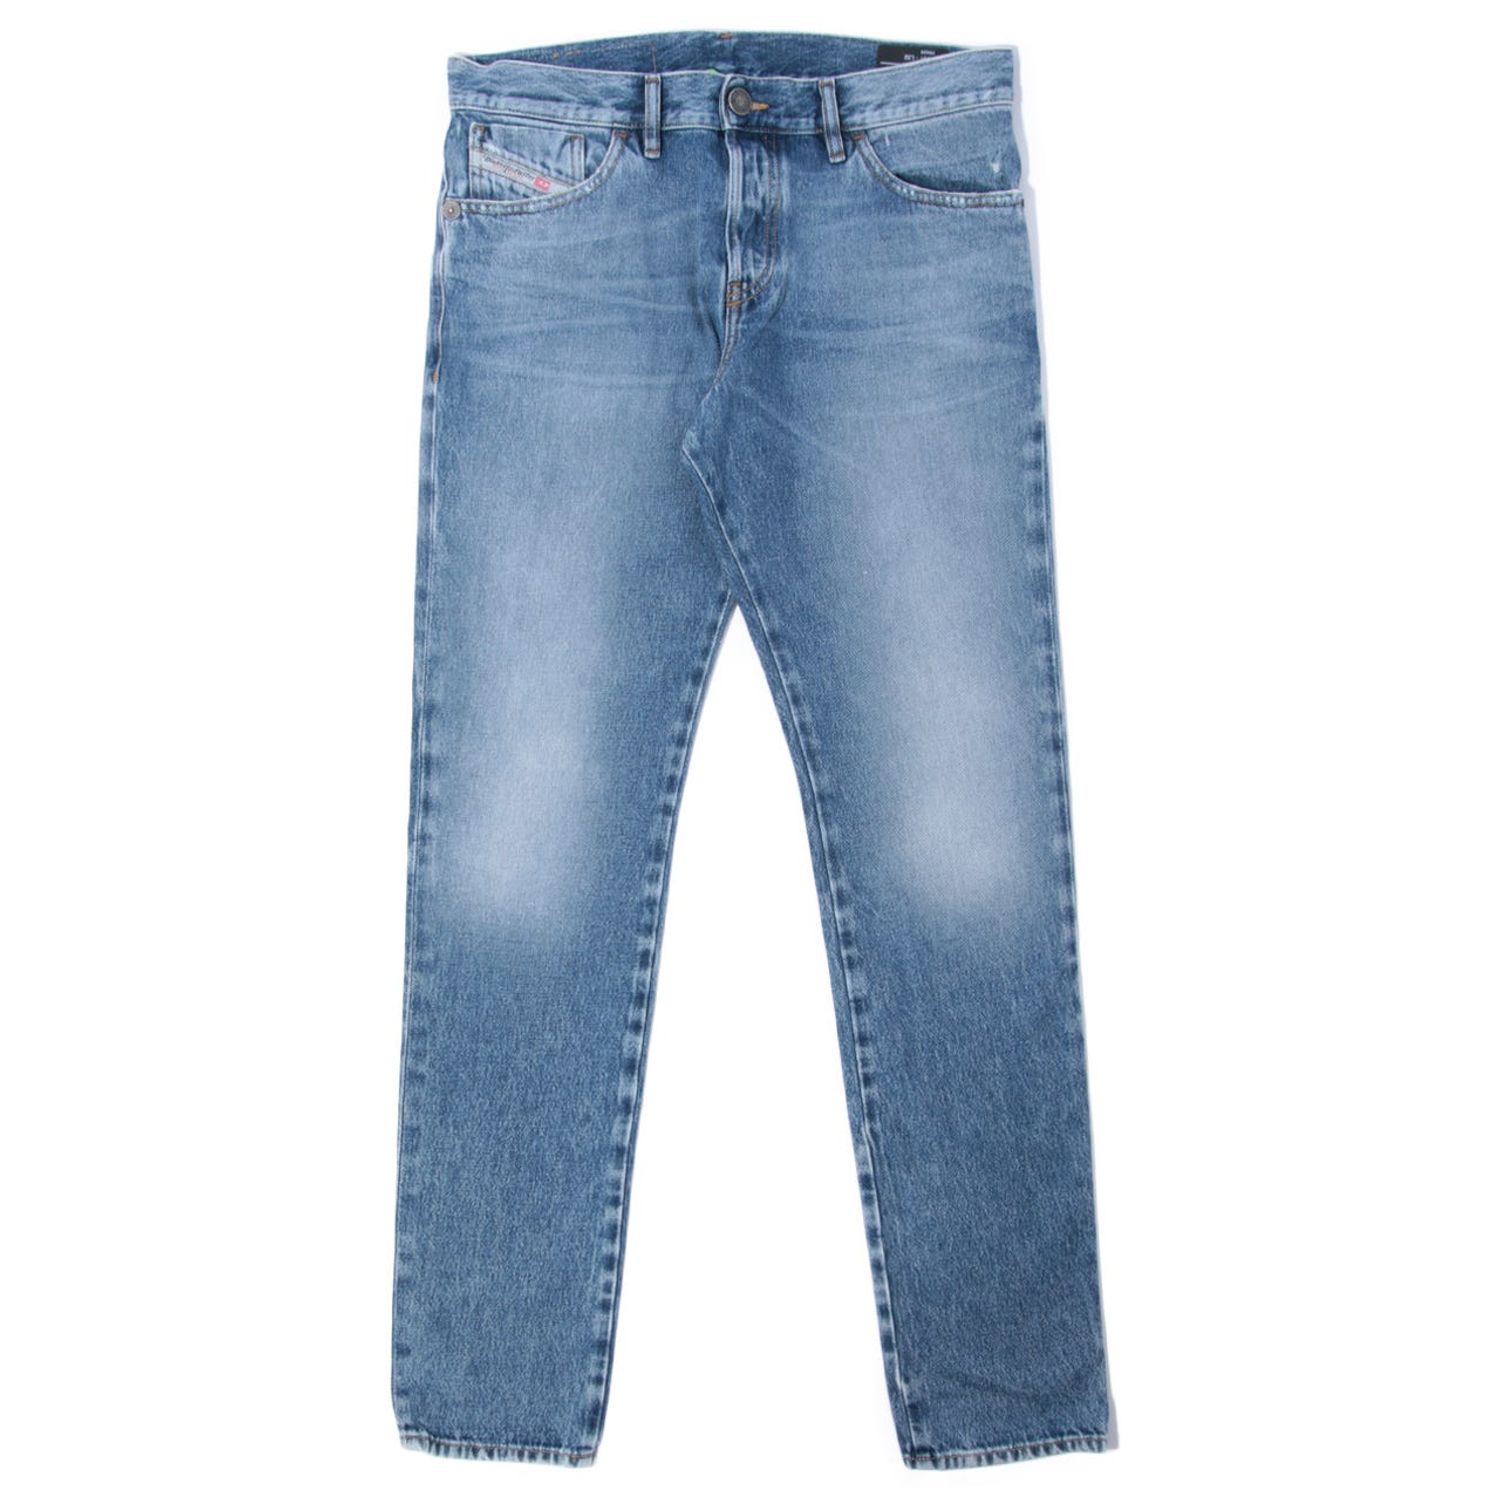 Blue Diesel Mens DKras Sustainable Slim Fit Jeans - Get The Label